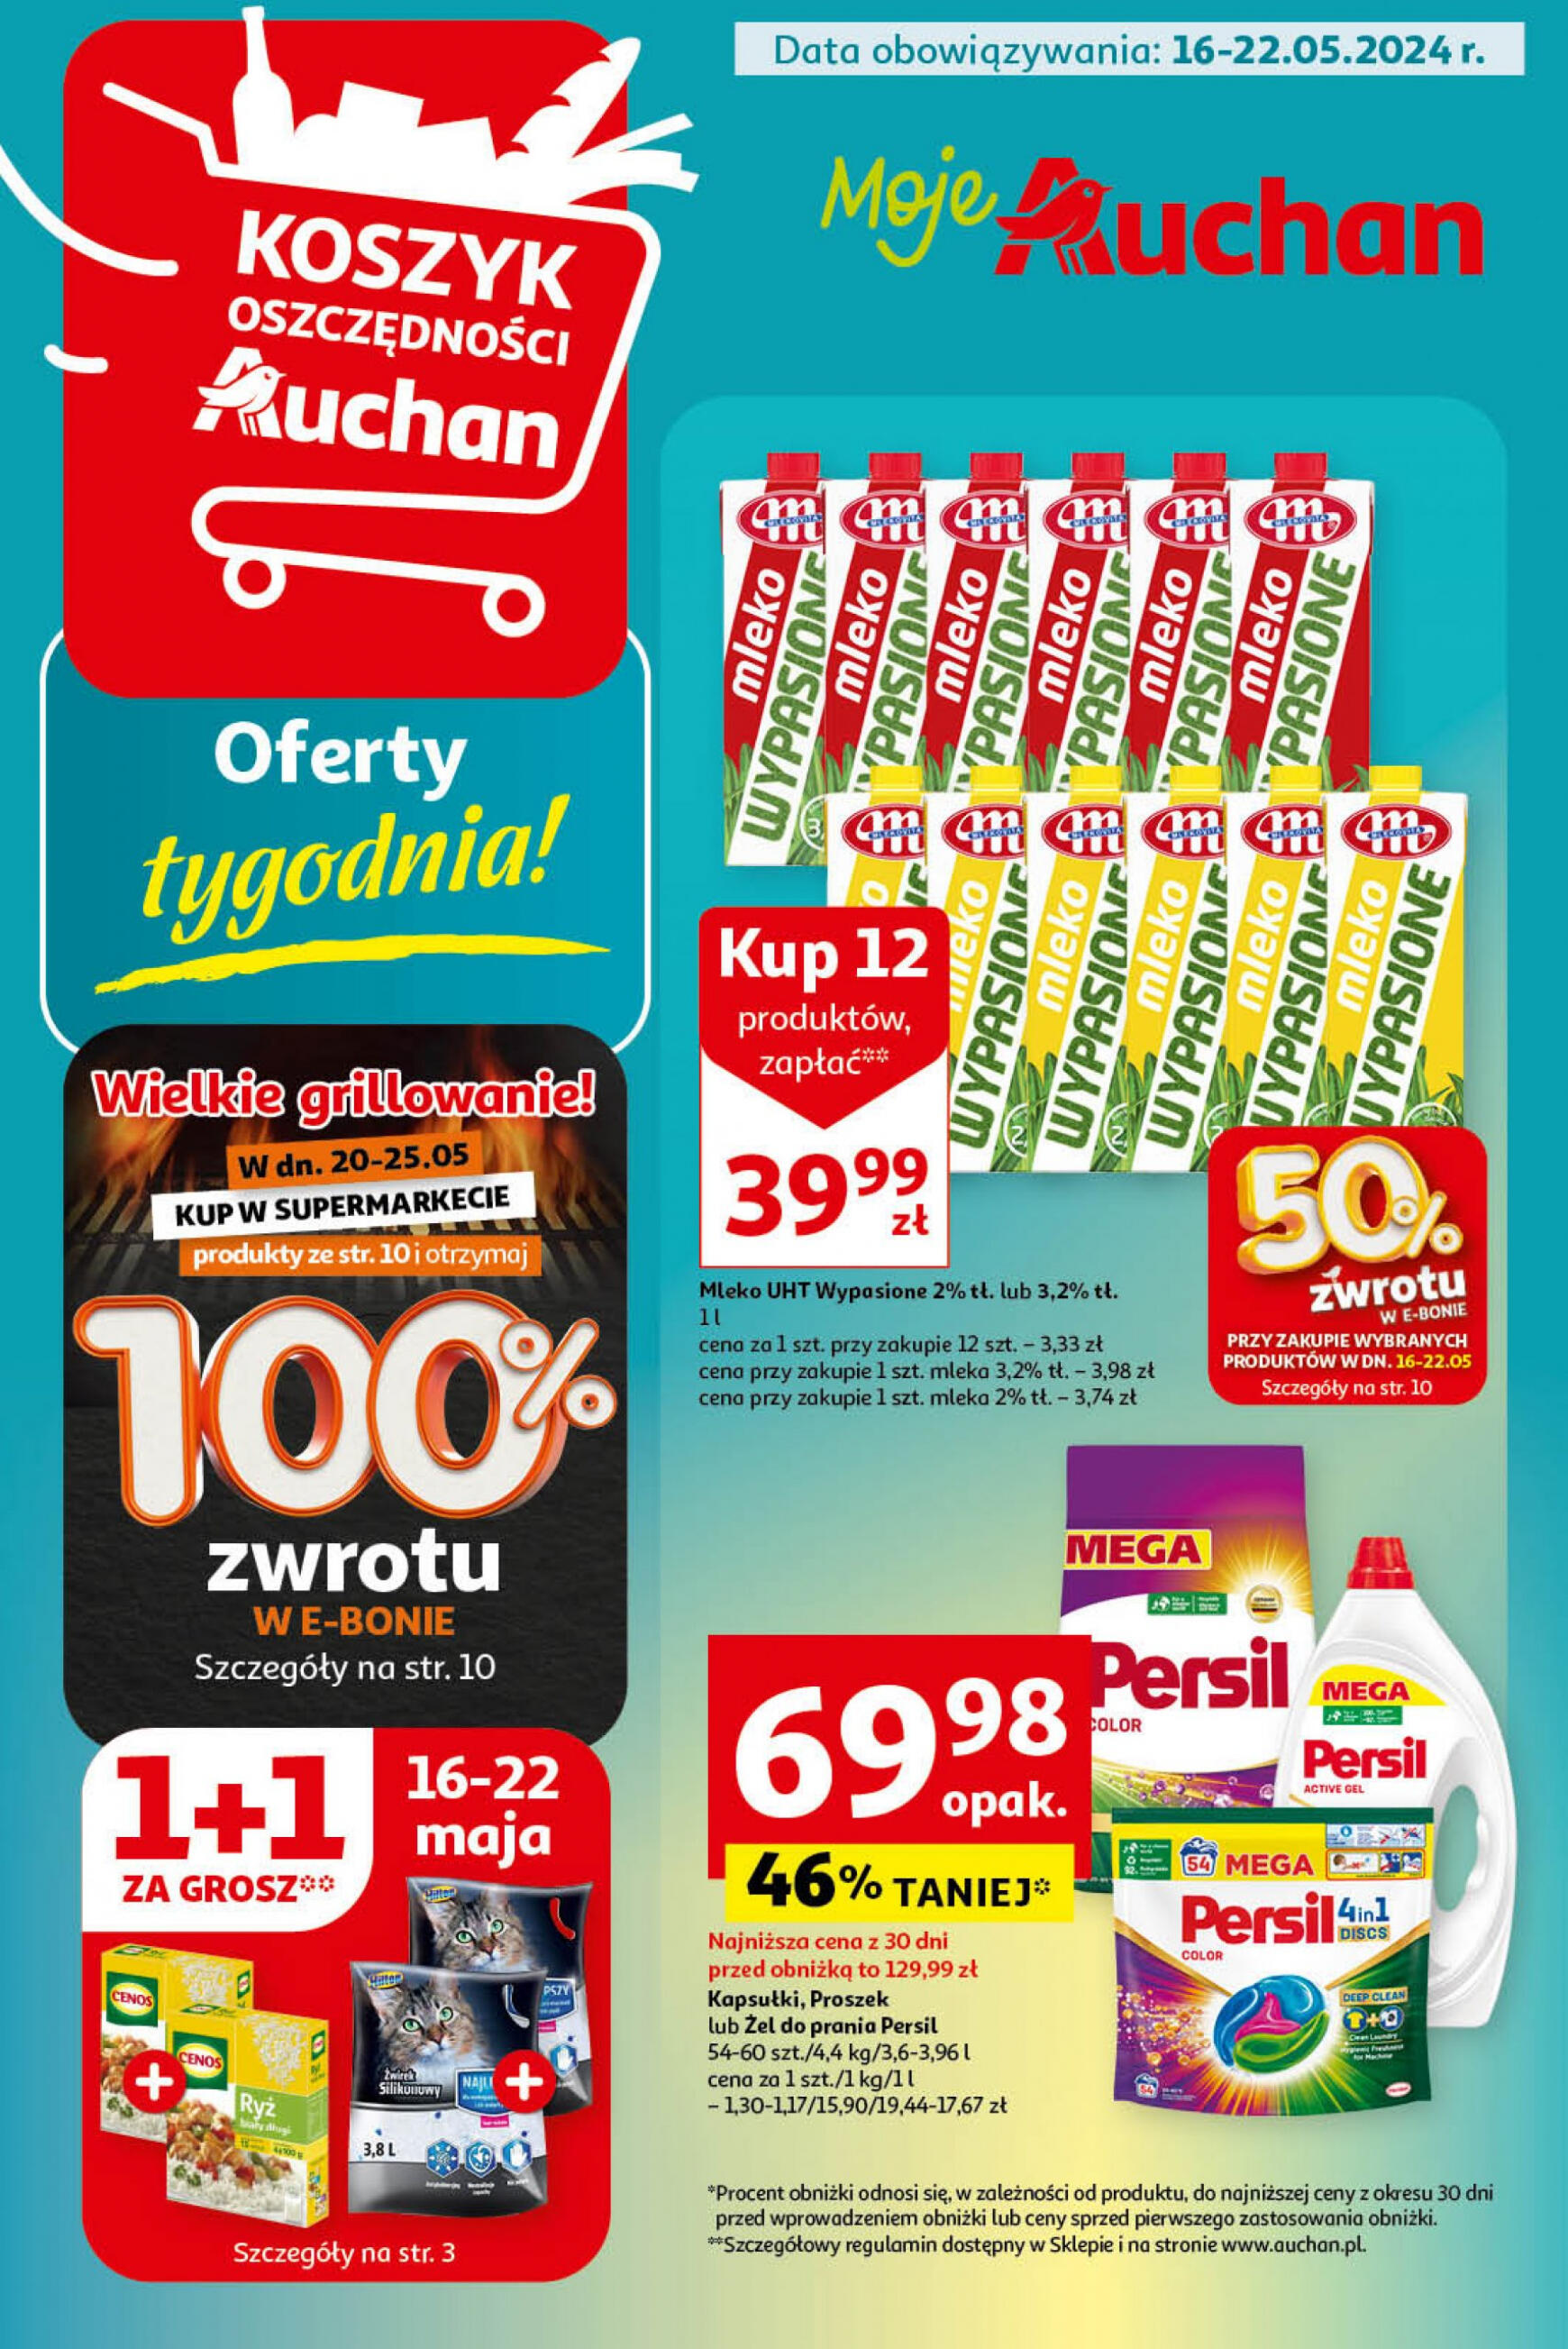 auchan - Moje Auchan gazetka aktualna ważna od 16.05. - 22.05. - page: 1